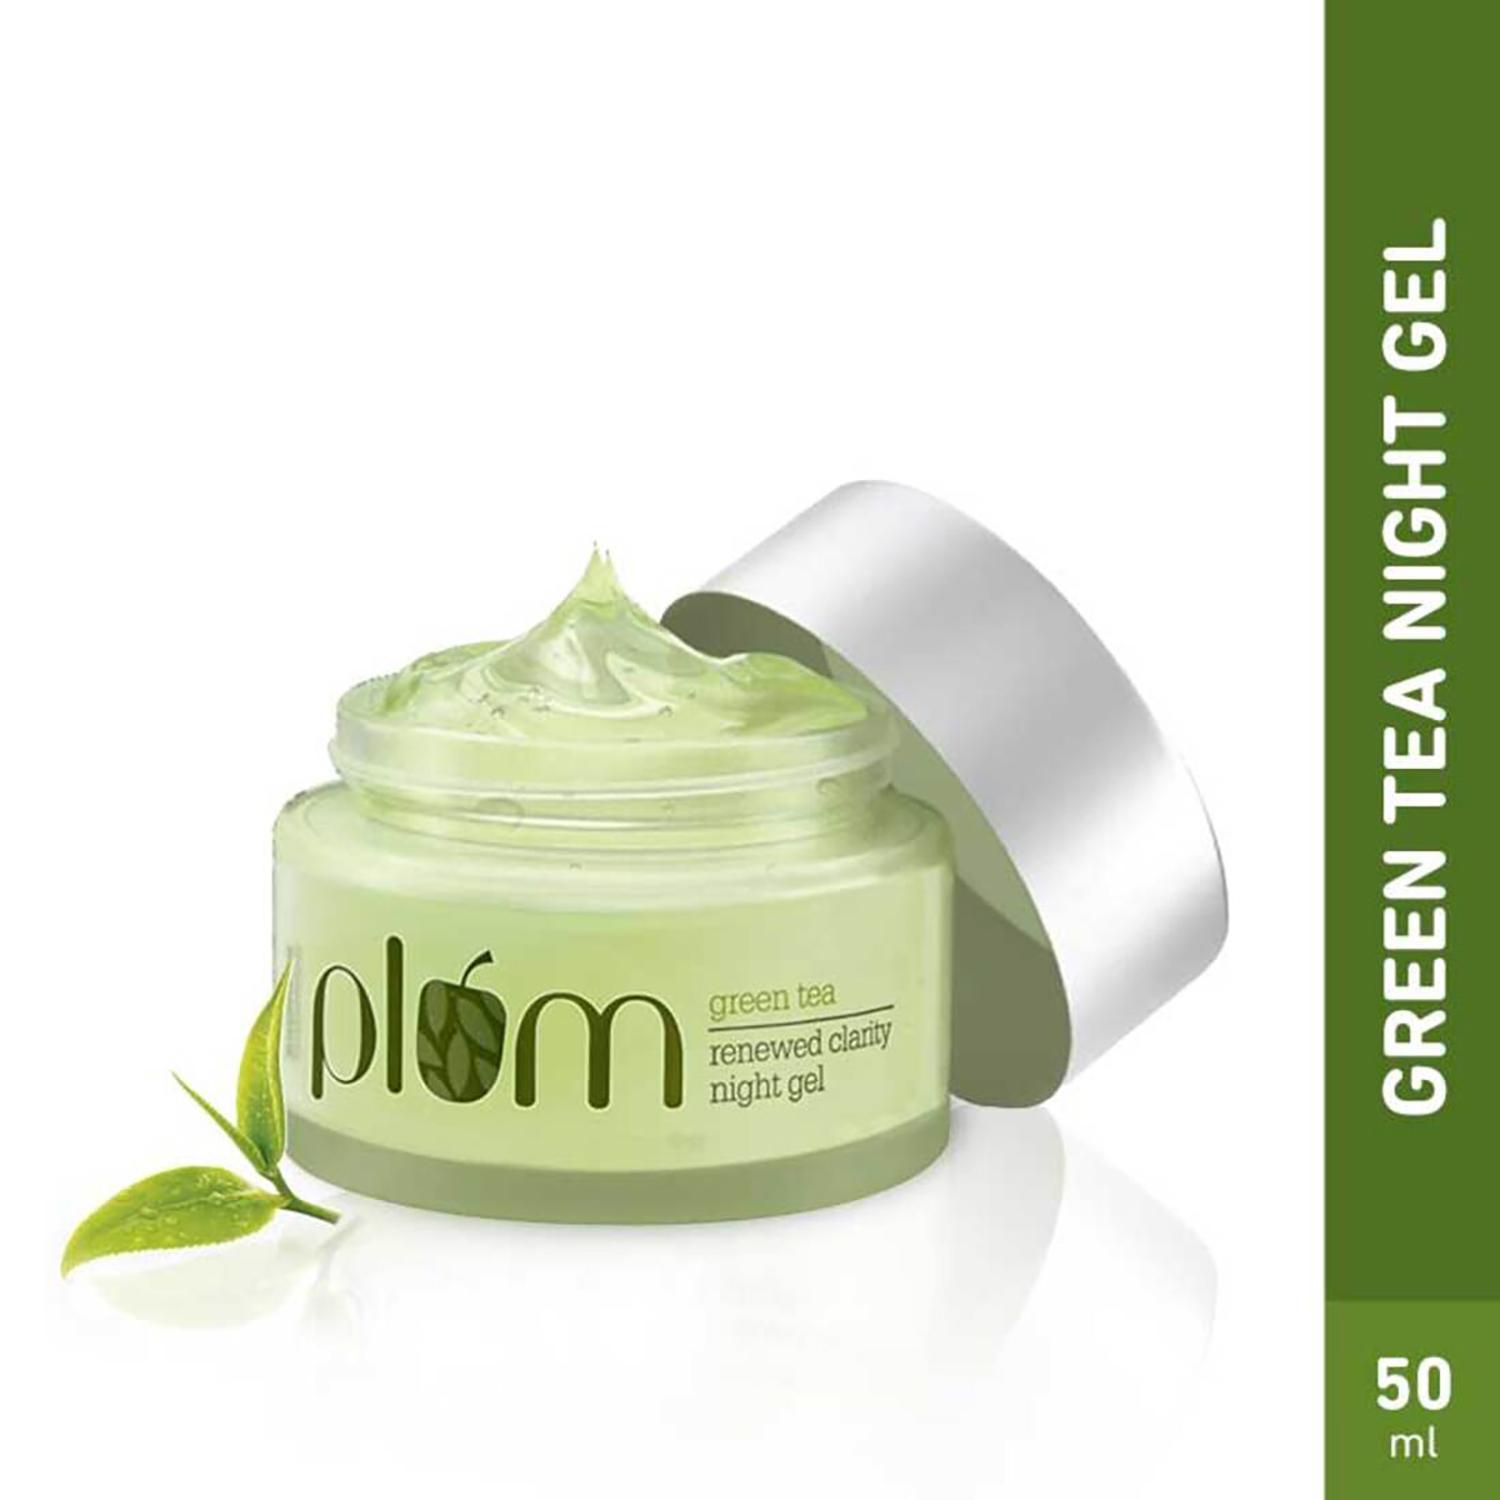 plum green tea renewing night gel, glycolic acid-fights acne for clear, oil-free, hydrated skin(50g)